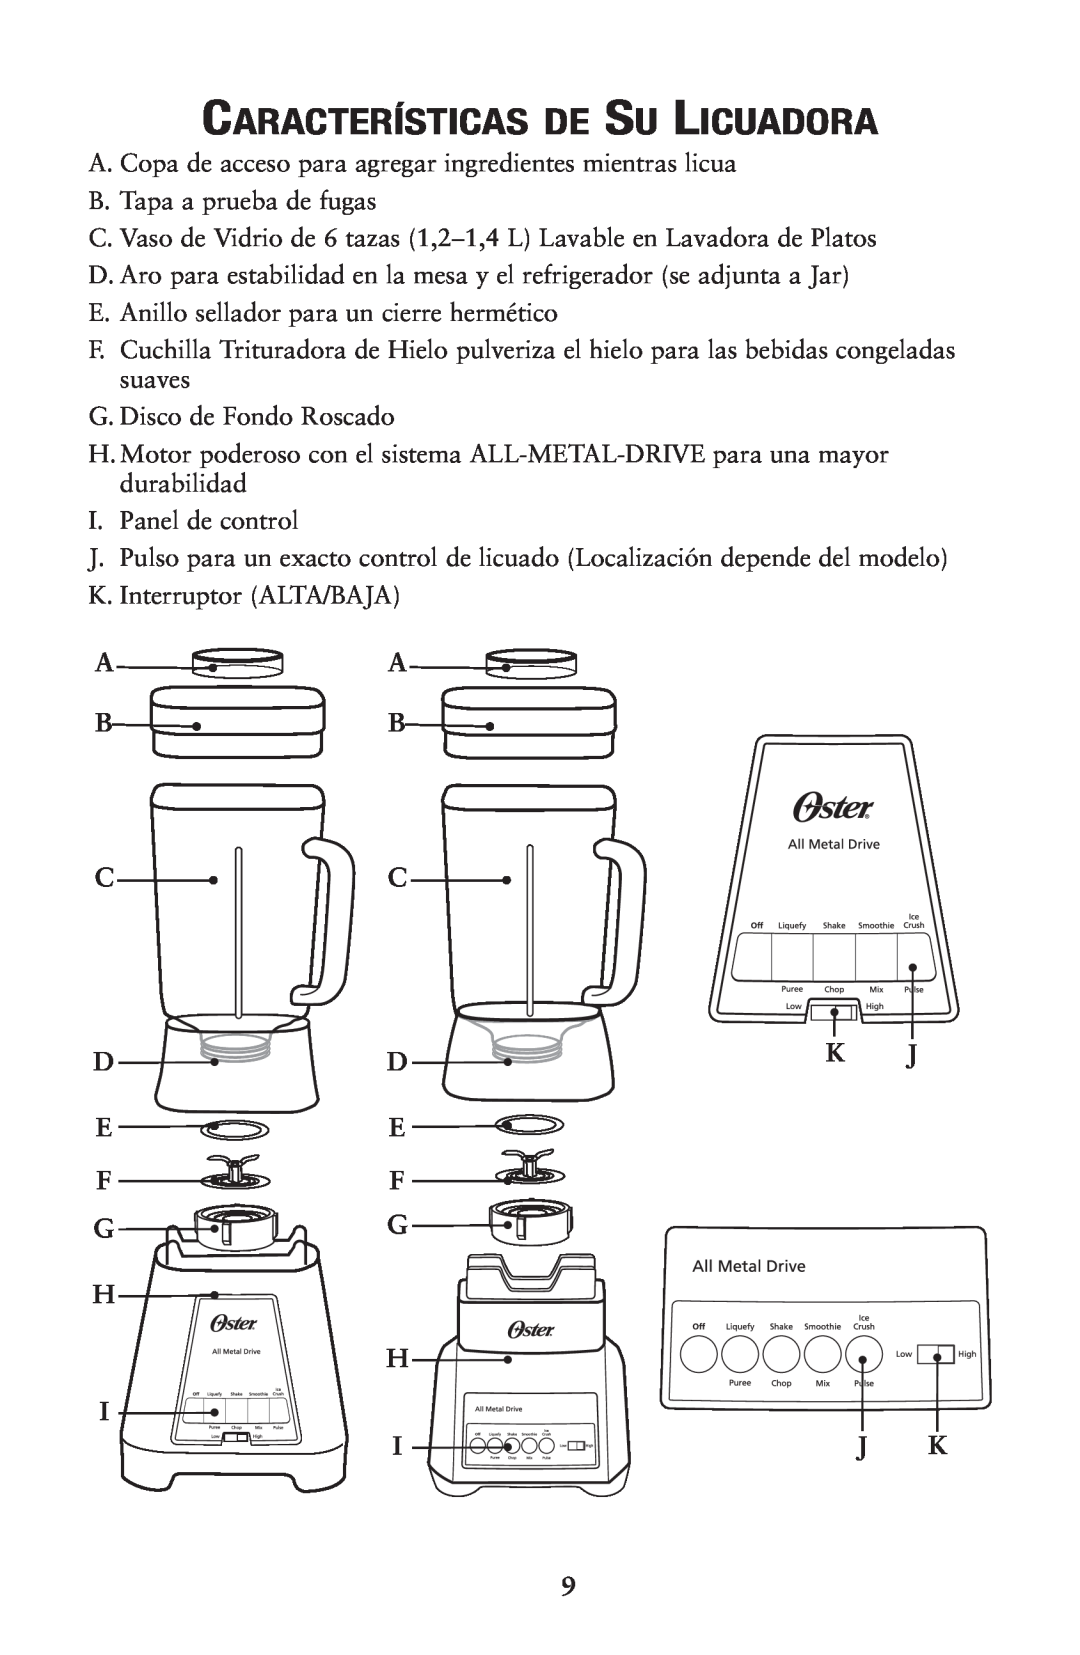 Oster 133086 user manual Características De Su Licuadora, A A Bb C C D D K J E E F F G G H H I I J K 